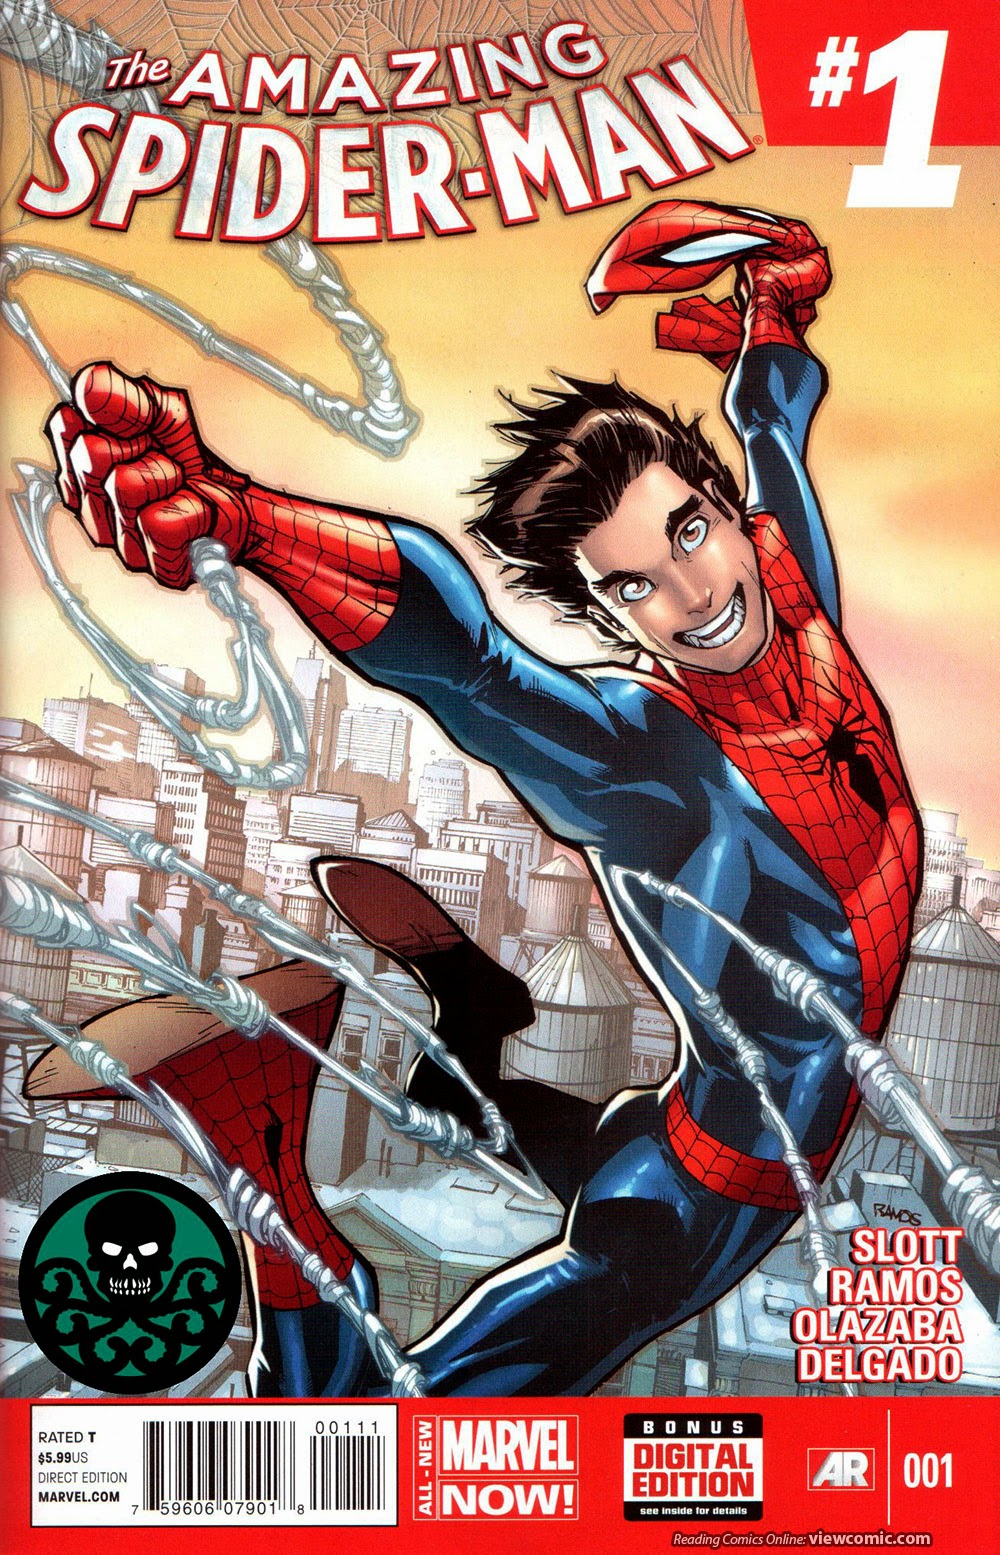 Read spiderman comics online free